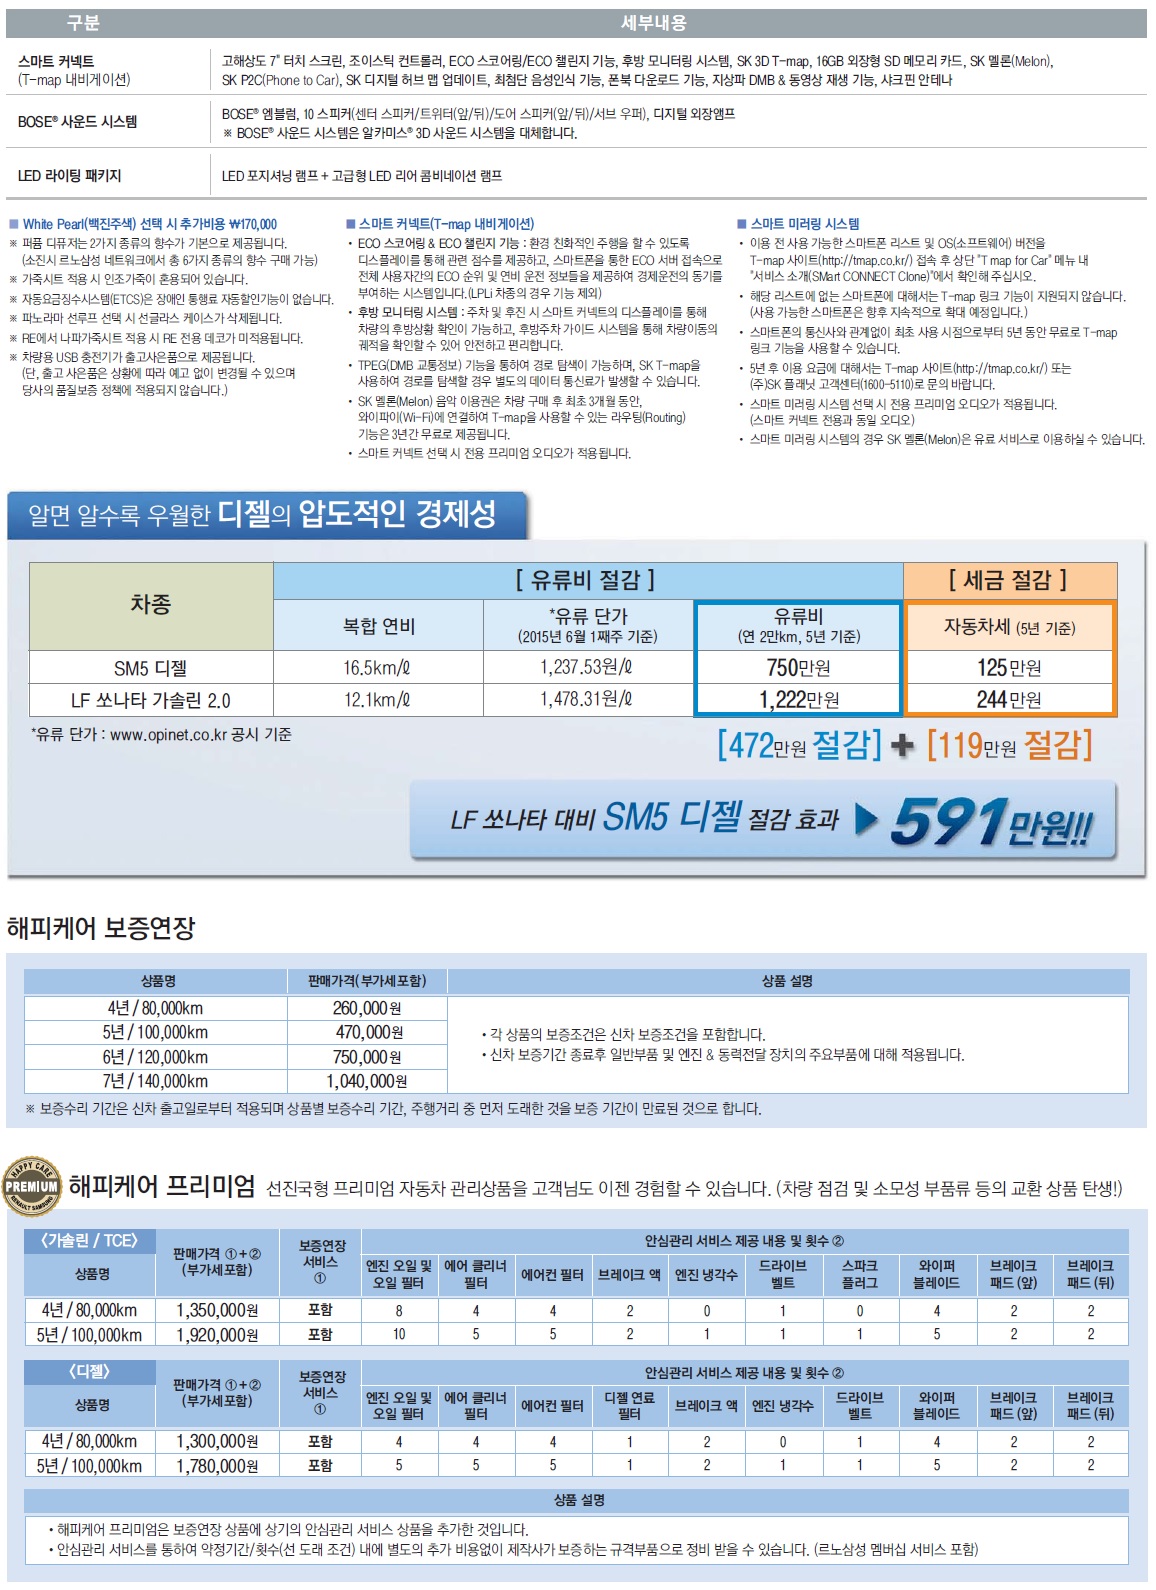 SM5 노바 가격표 - 2016년형 (2015년 08월) -3.jpg